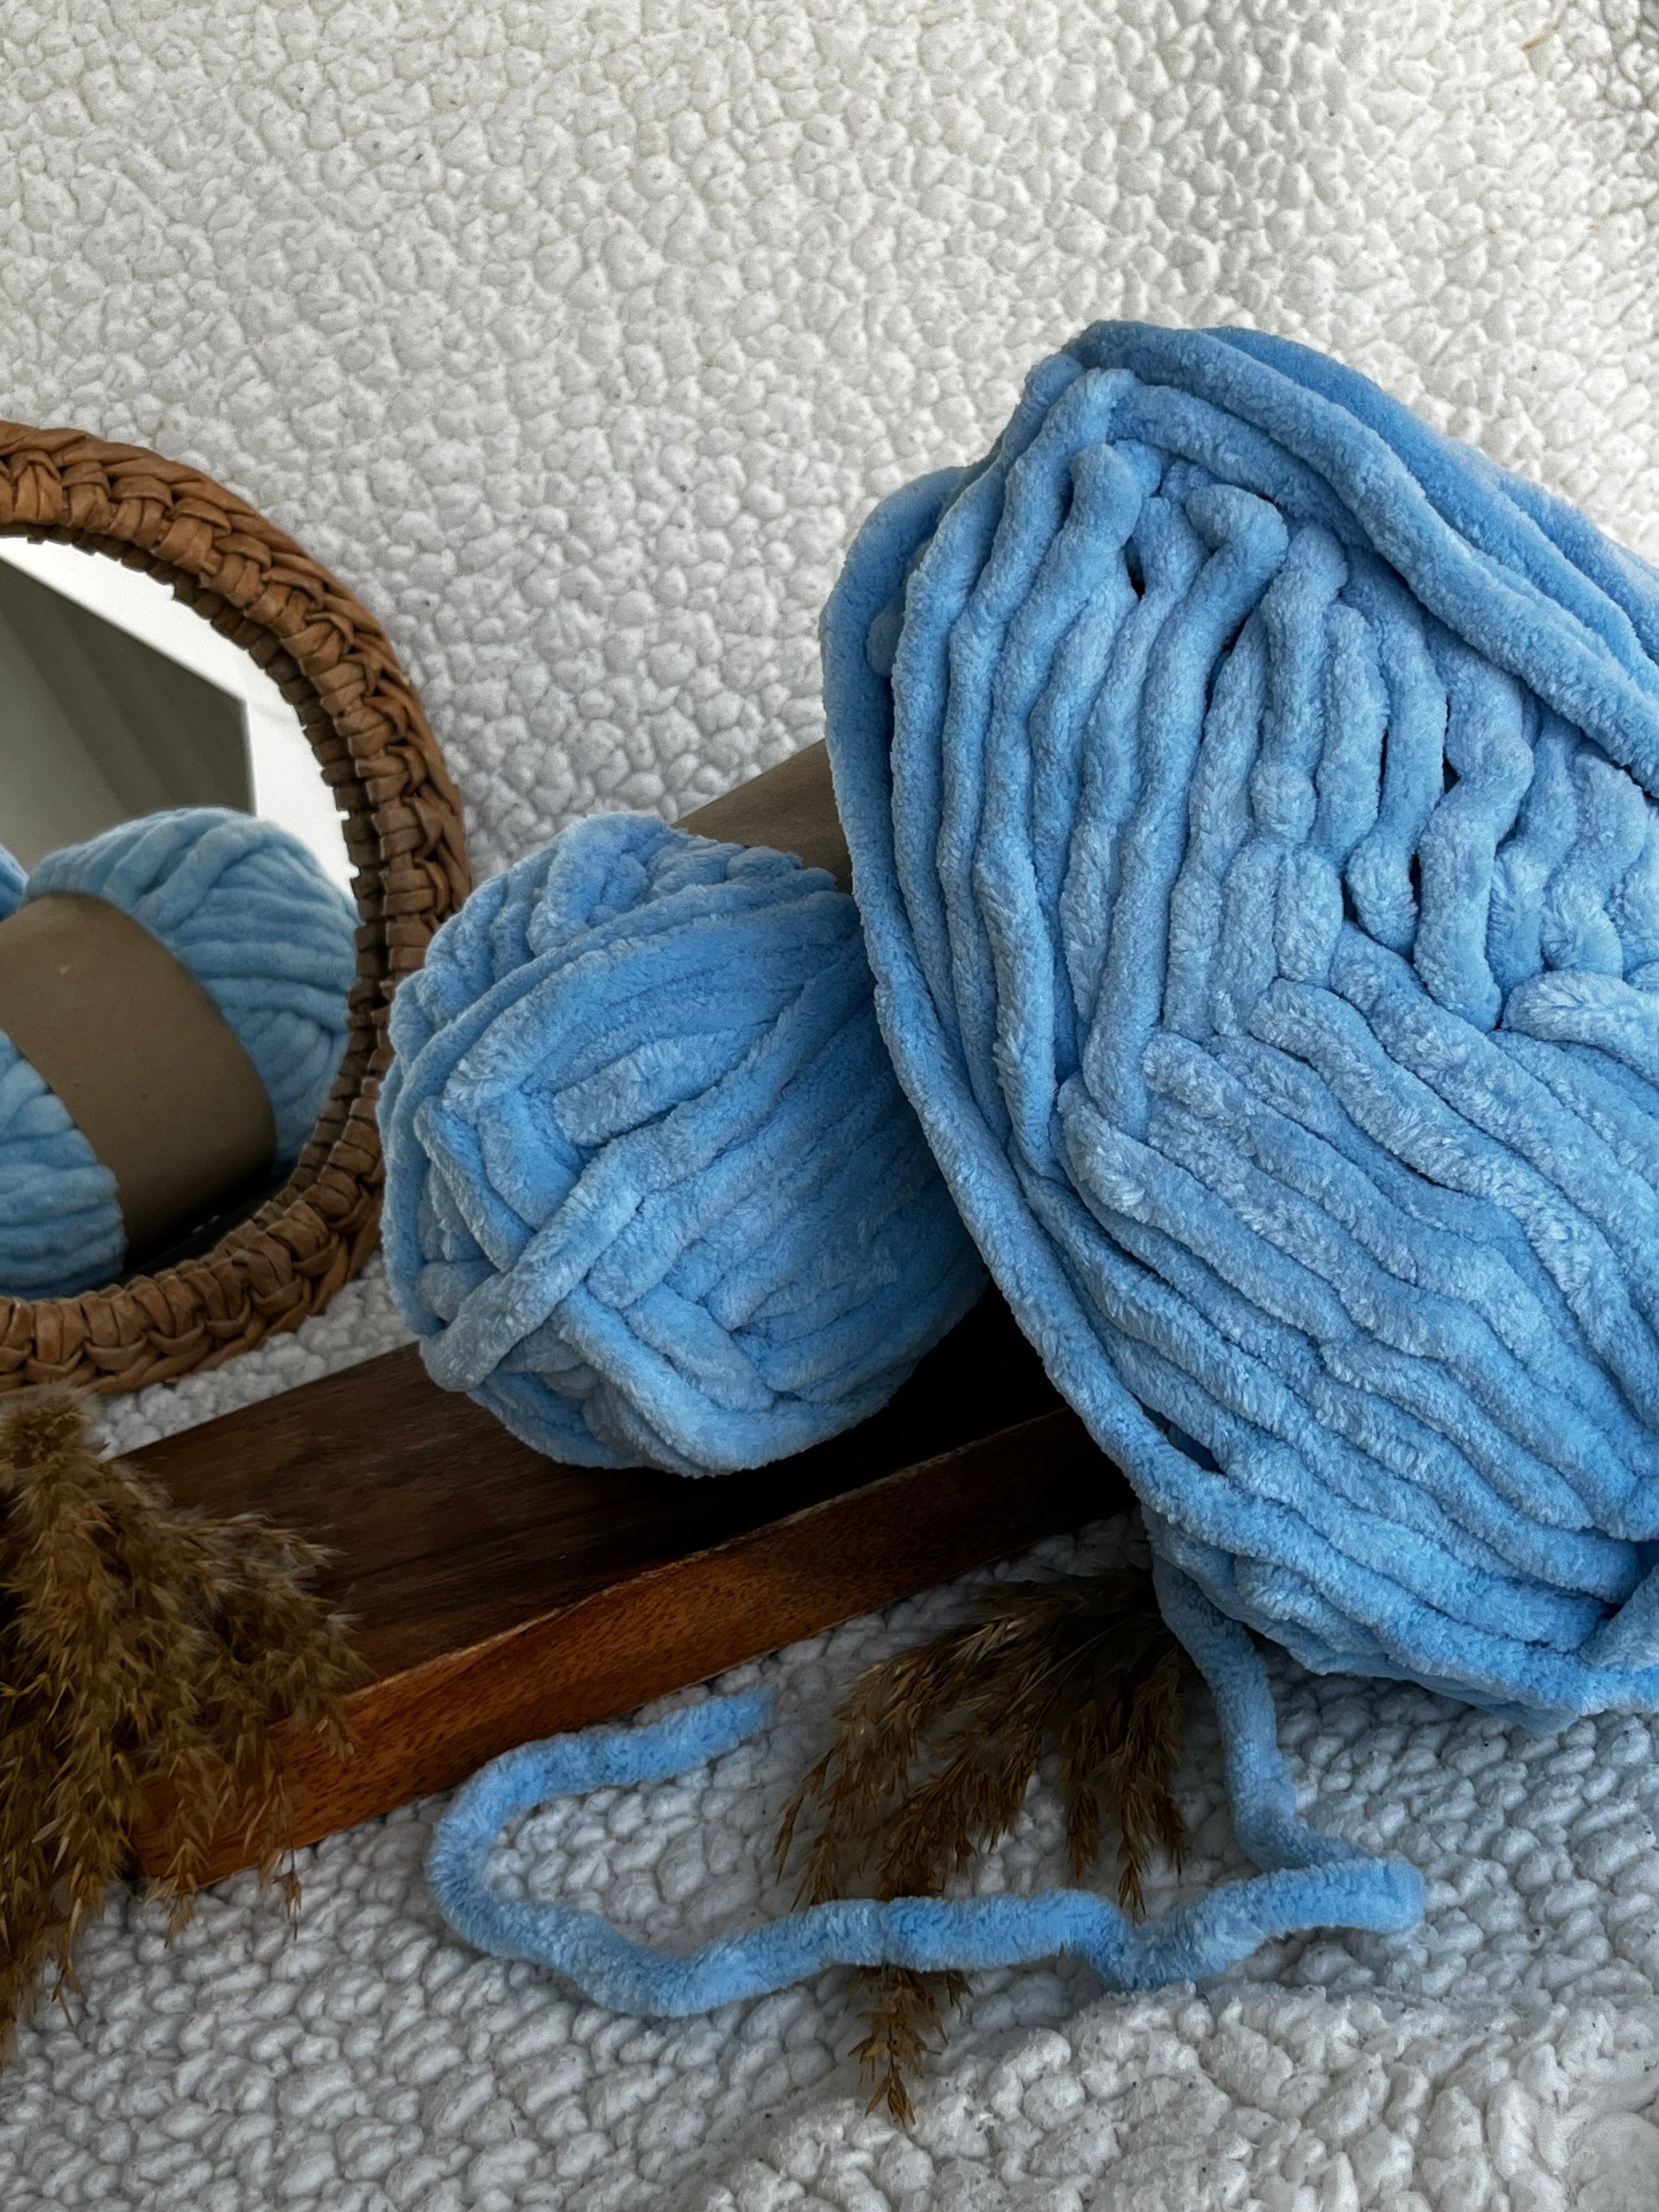 Inlove Chunky Cotton Yarn by Circulo Natural 20